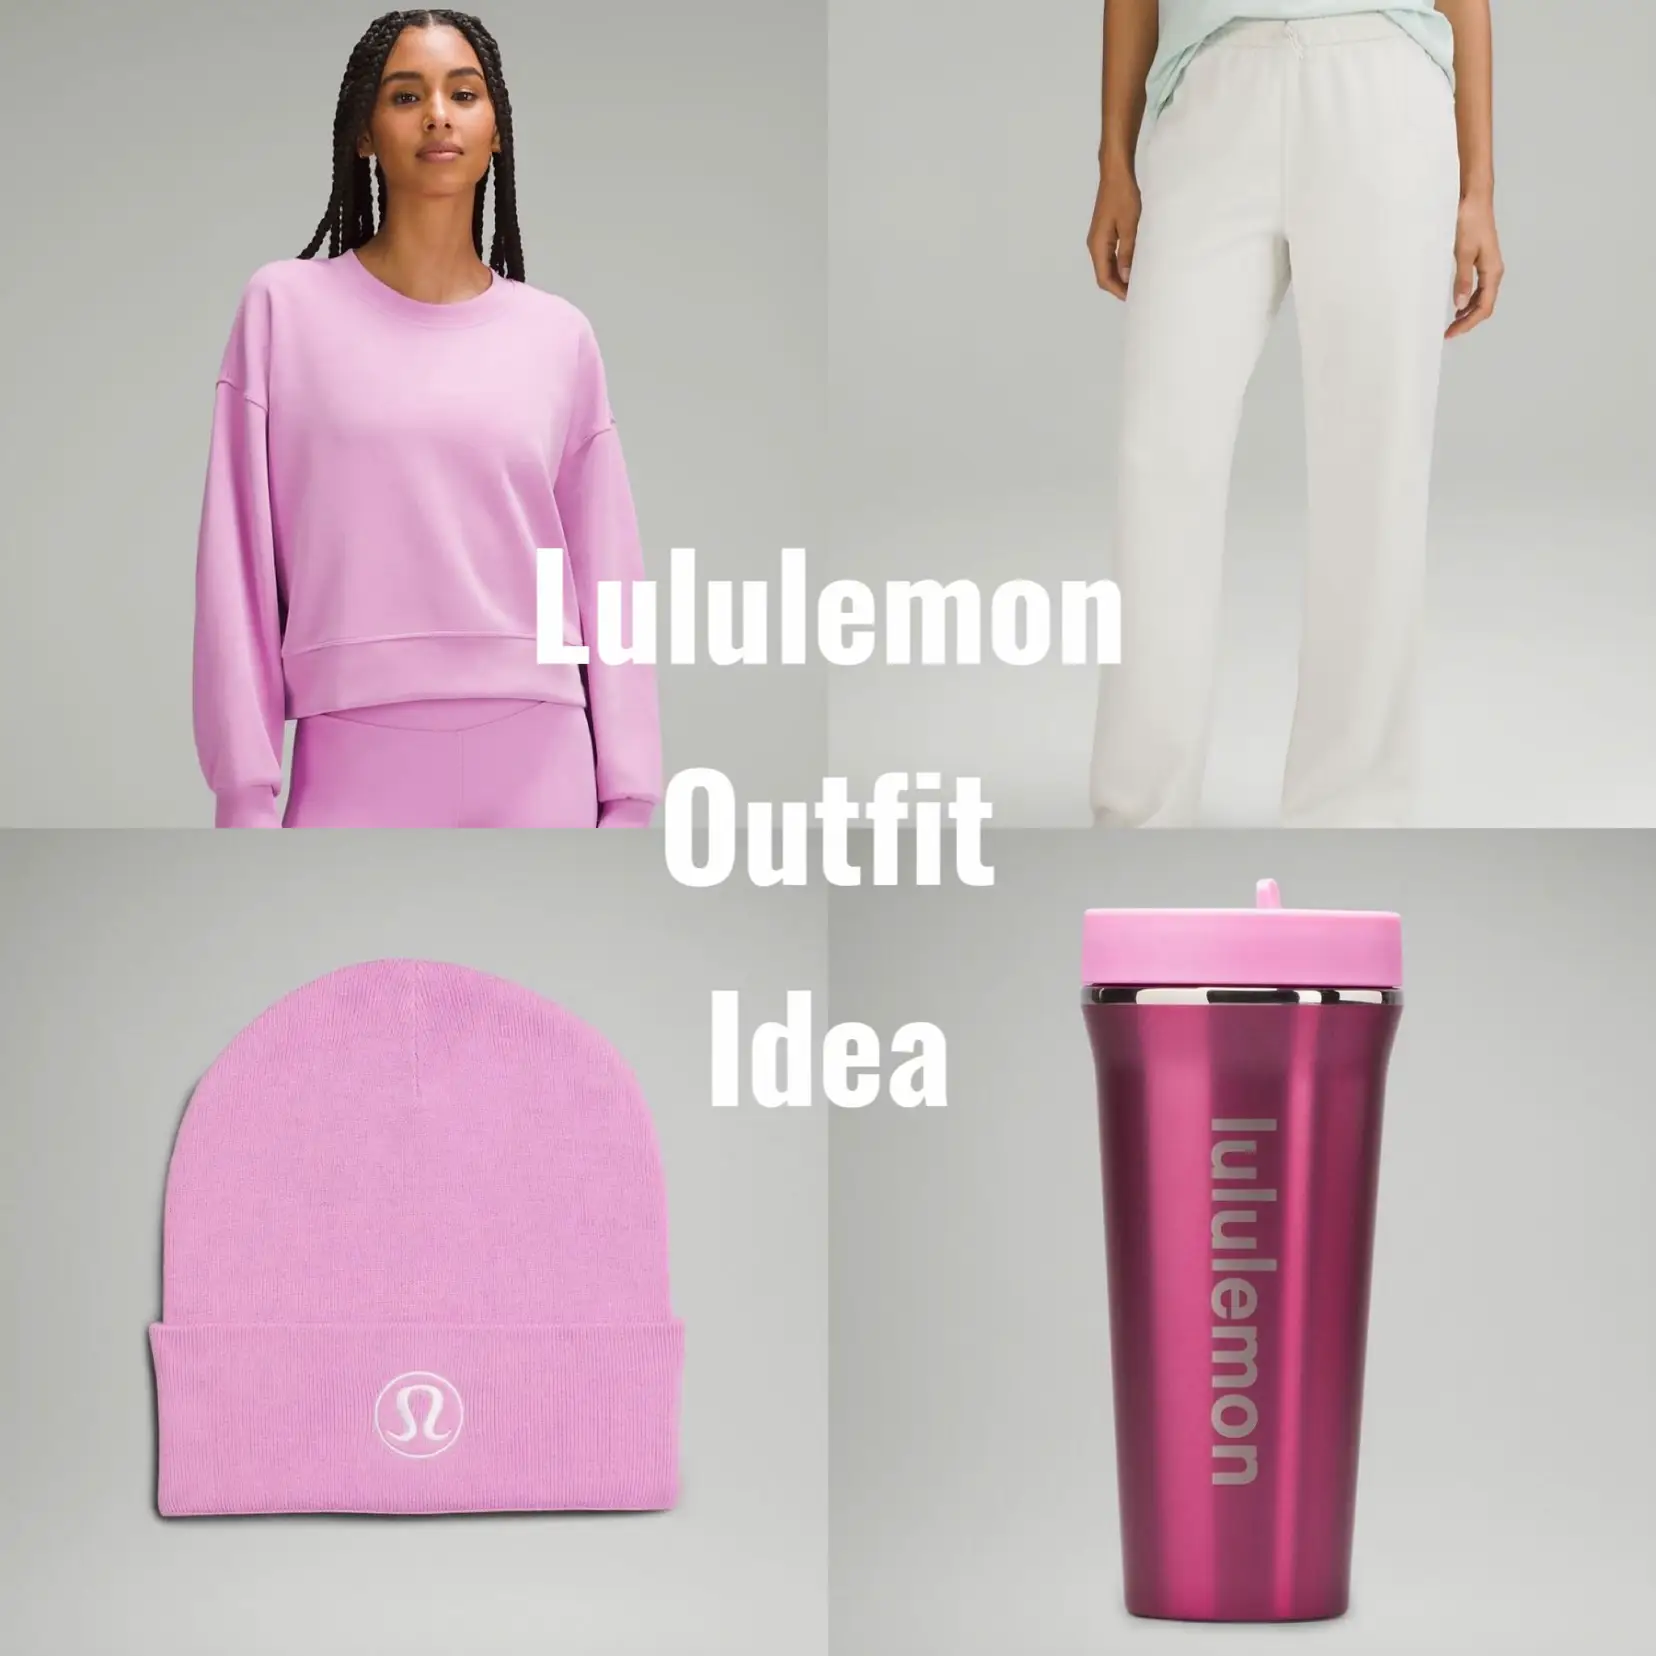 Lululemon Outfit Codes for Bloxburg - Lemon8 Search